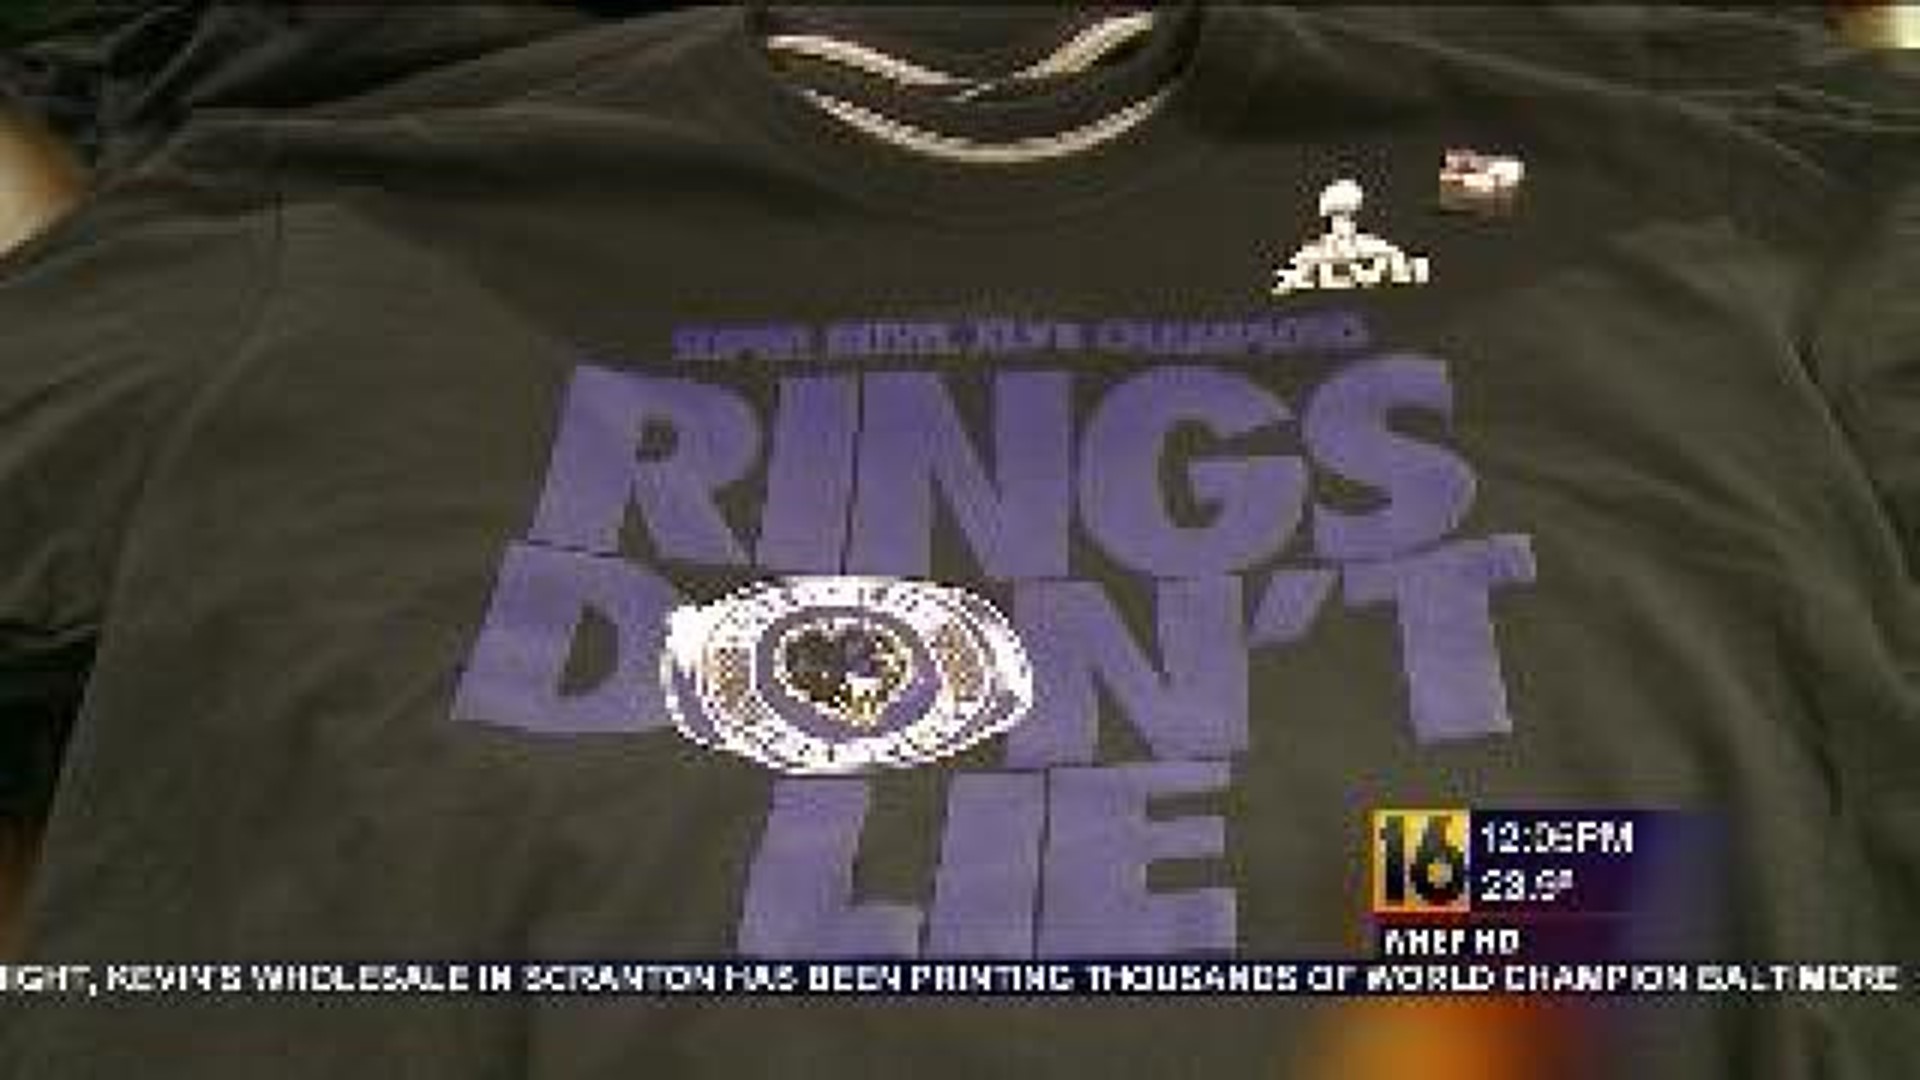 Ravens Win, Scranton Shirt Makers Go To Work